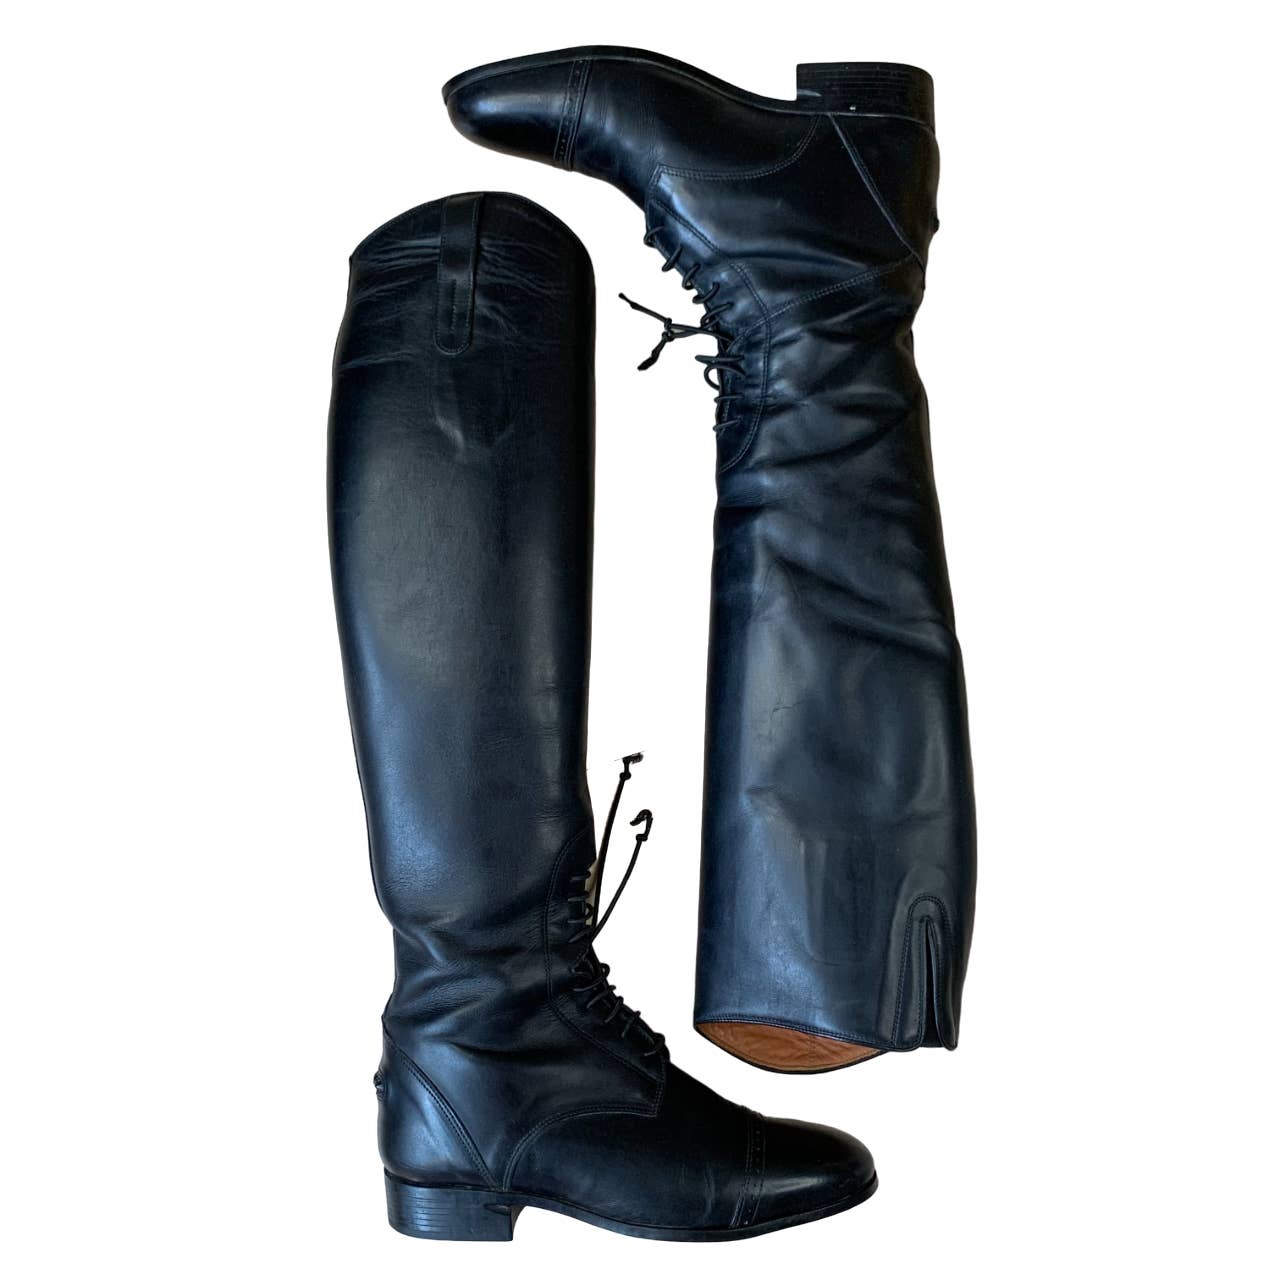 Ariat Crowne Field Boots in Black - 8 Full / Tall